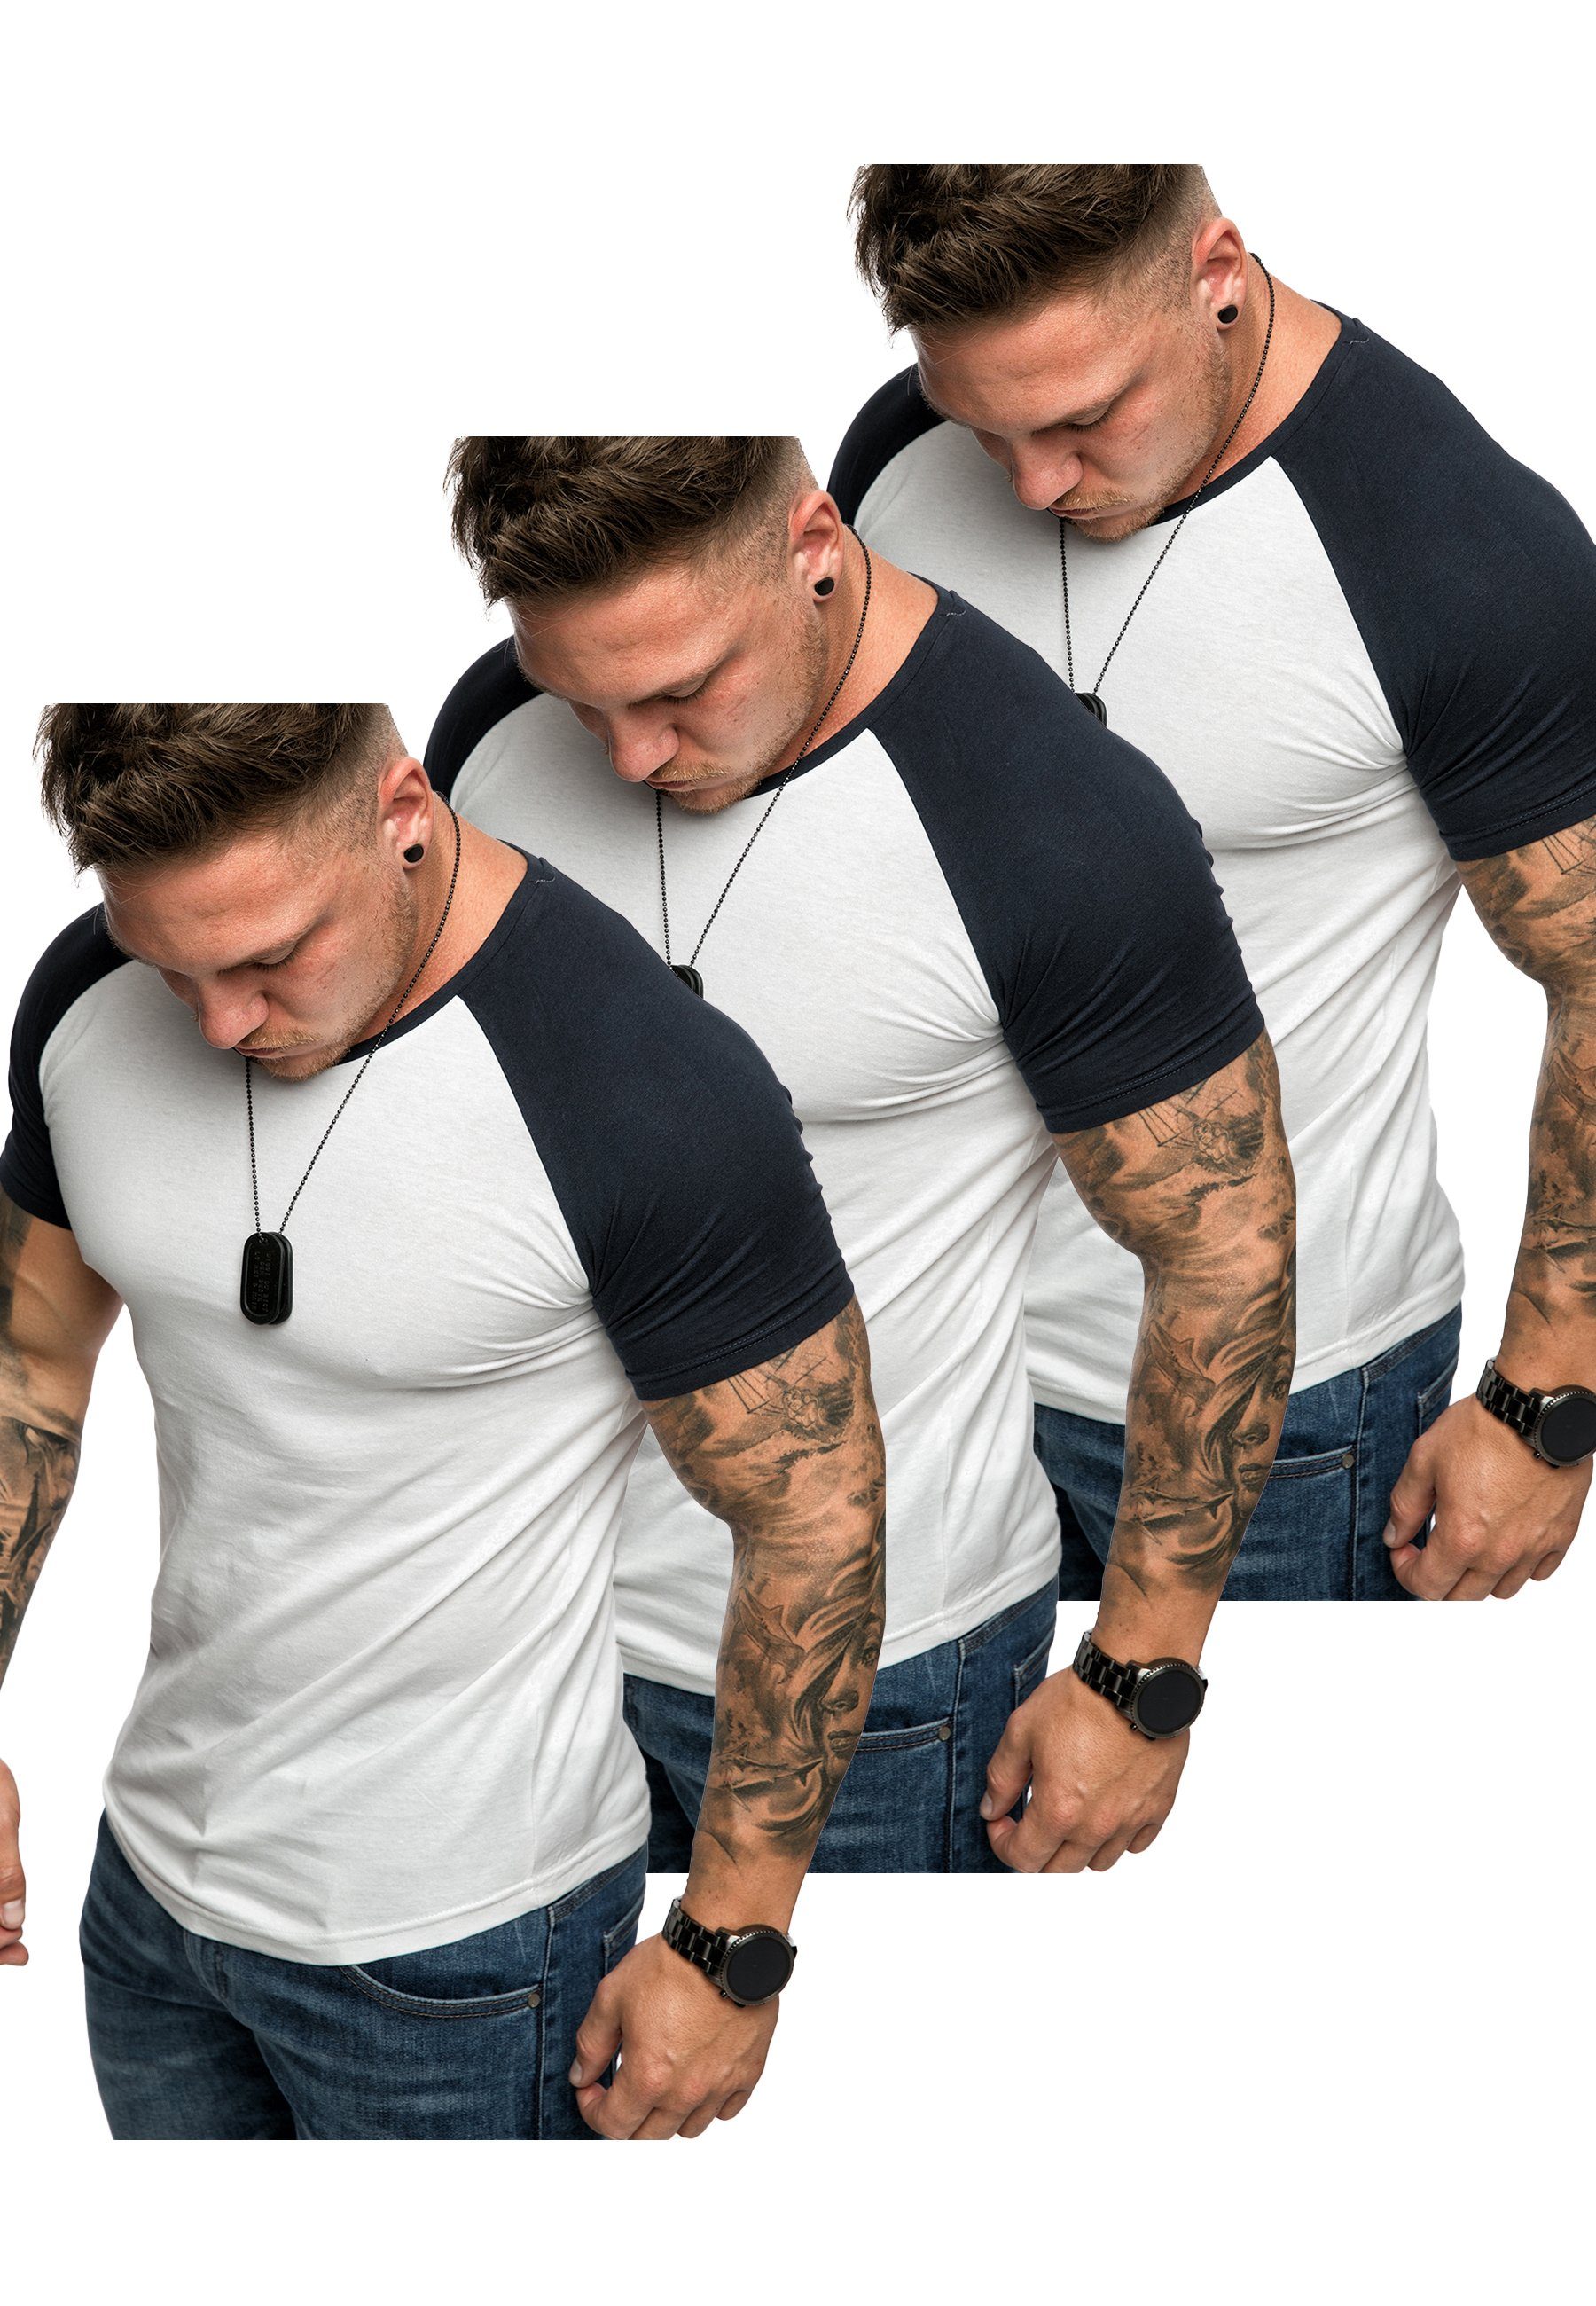 T-Shirts OMAHA Oversize Herren Basic (3x Amaci&Sons T-Shirt T-Shirt Kontrast (3er-Pack) Raglan Weiß/Navyblau) 3er-Pack 3.